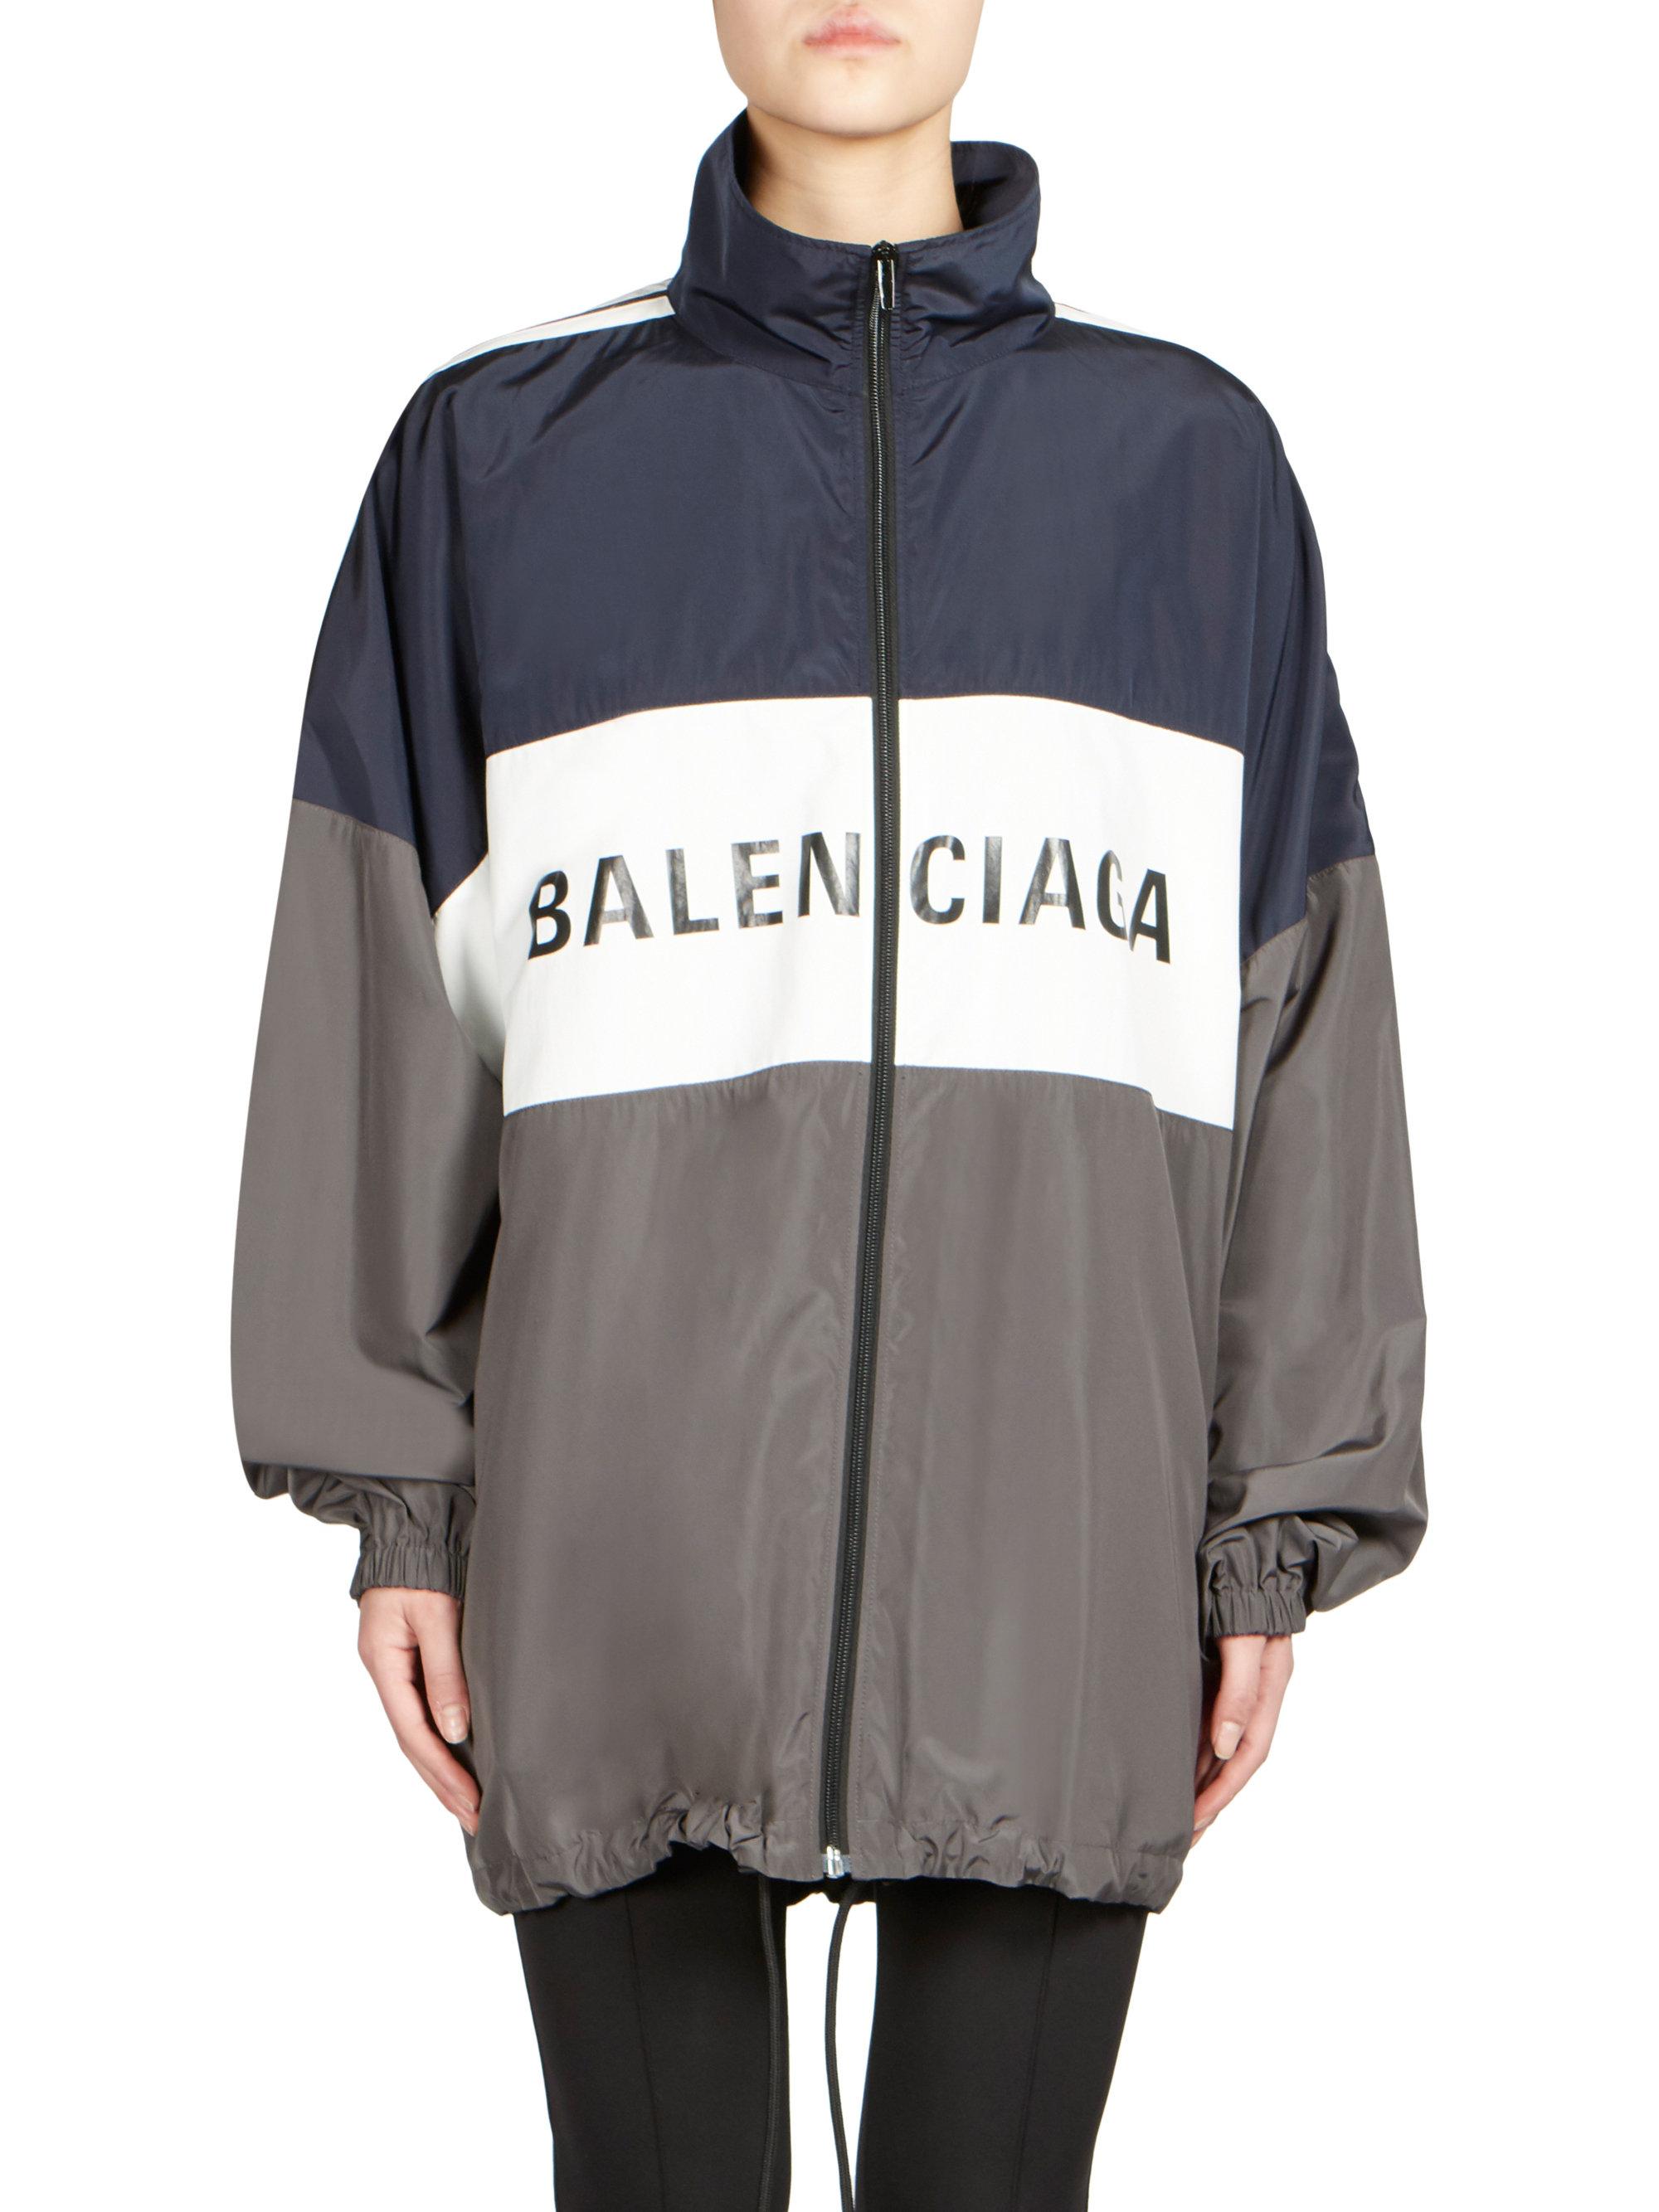 Balenciaga Oversized Logo Track Jacket in Navy (Blue) - Lyst